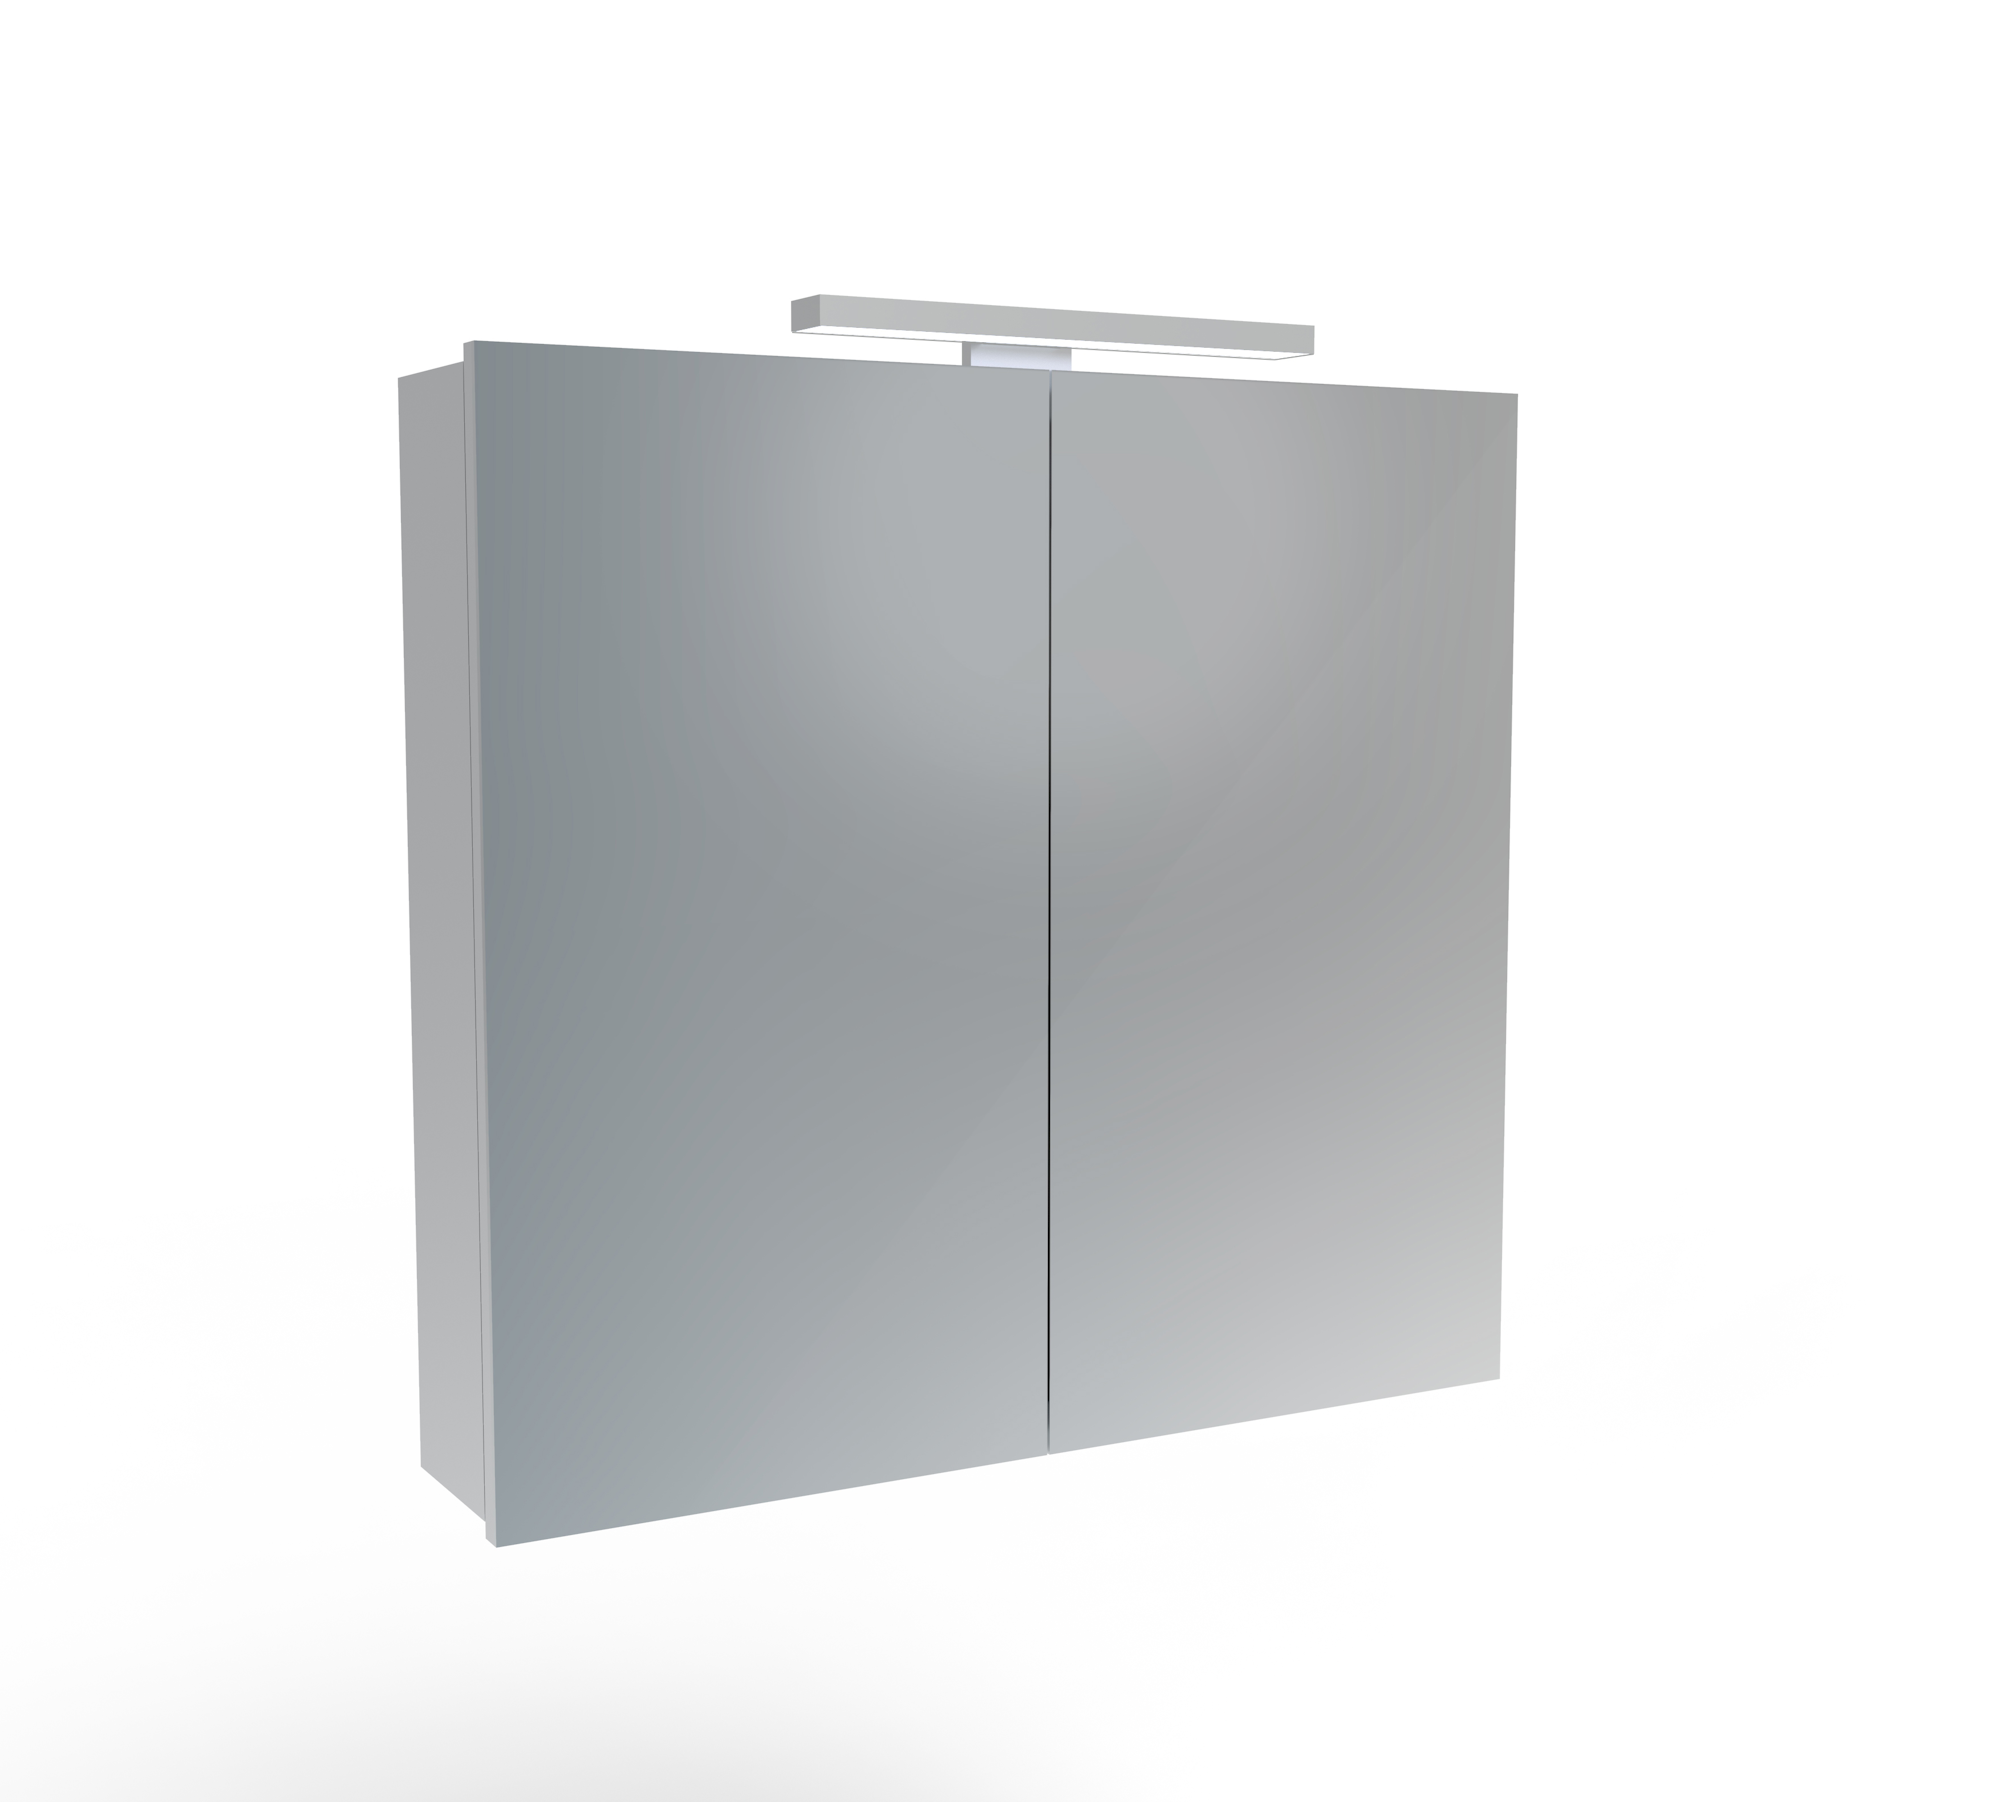 OLYMPUS 75cm 2 door electric mirror cabinet